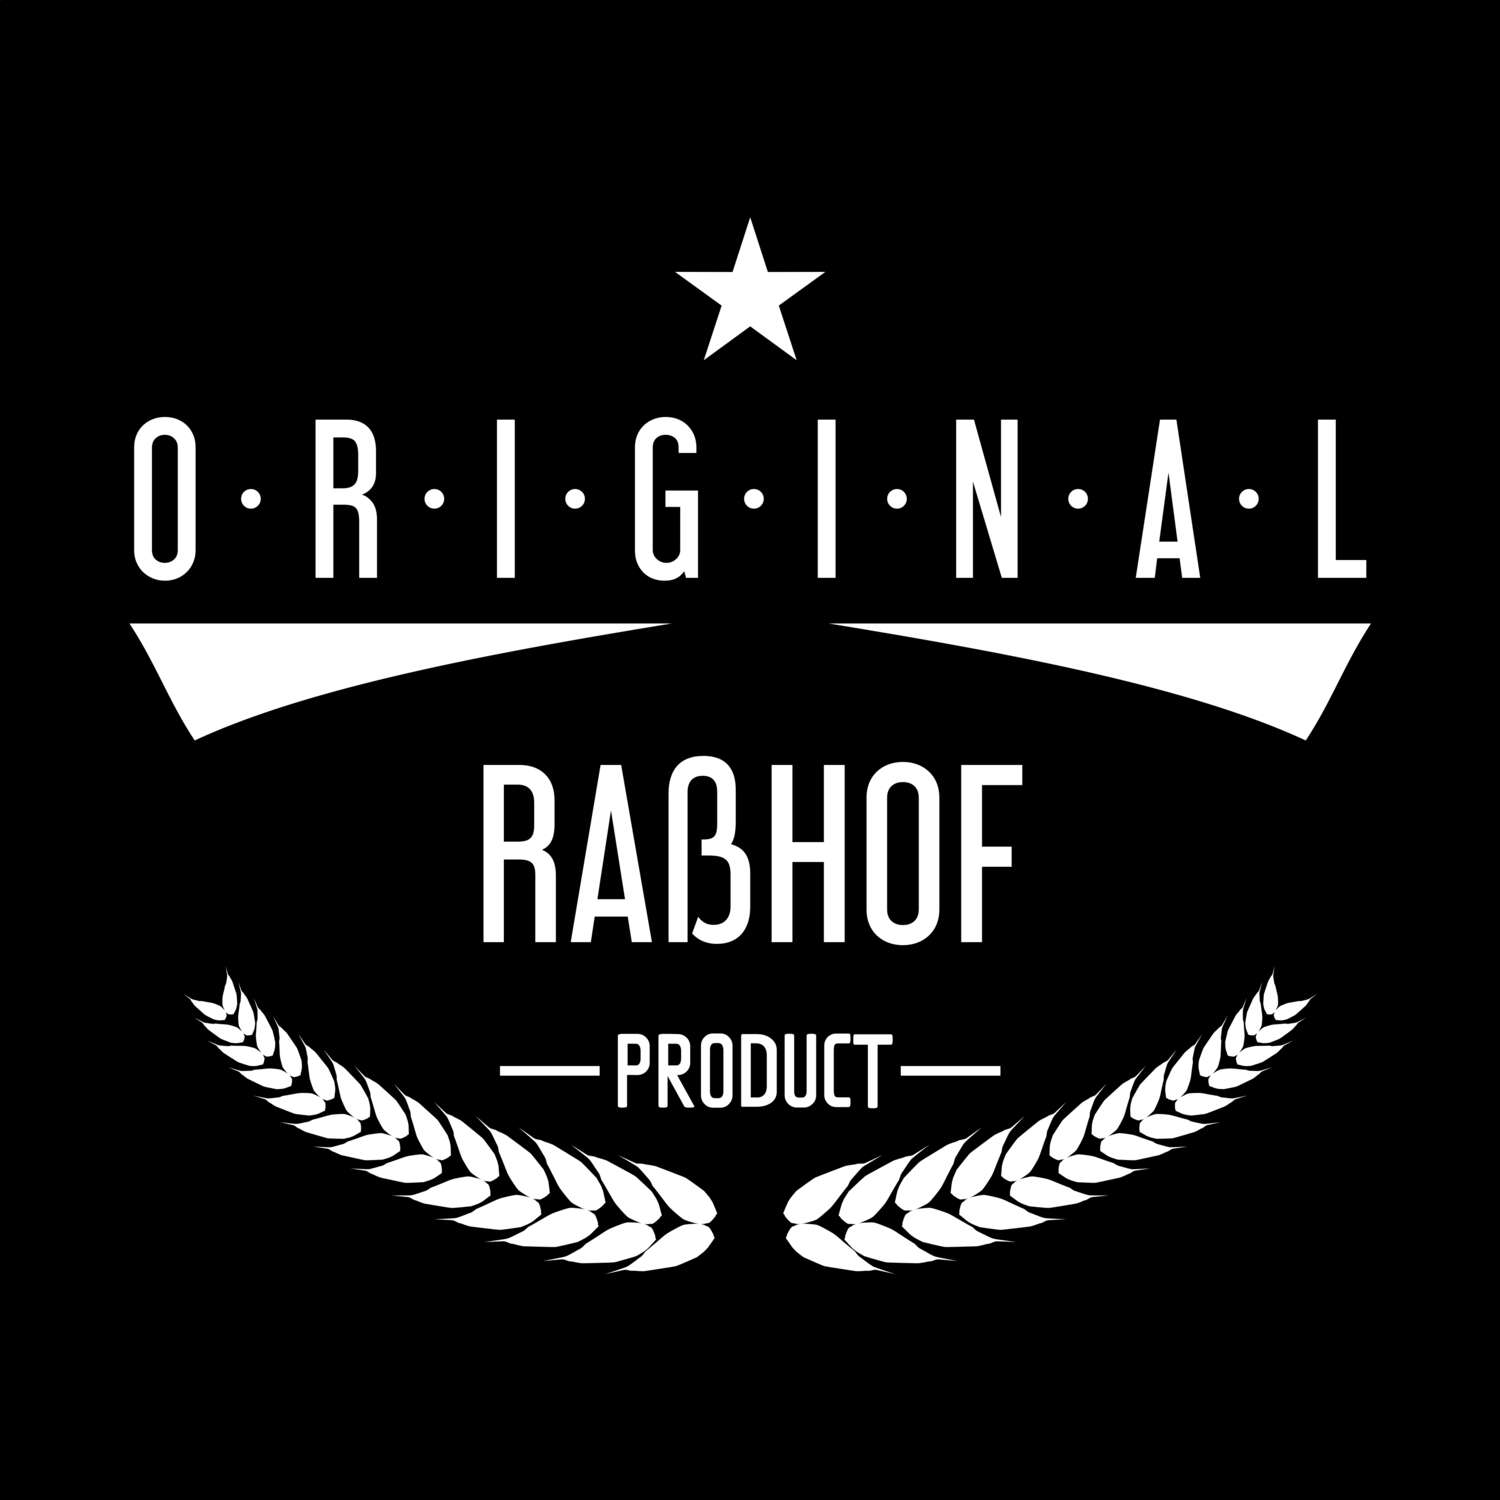 Raßhof T-Shirt »Original Product«